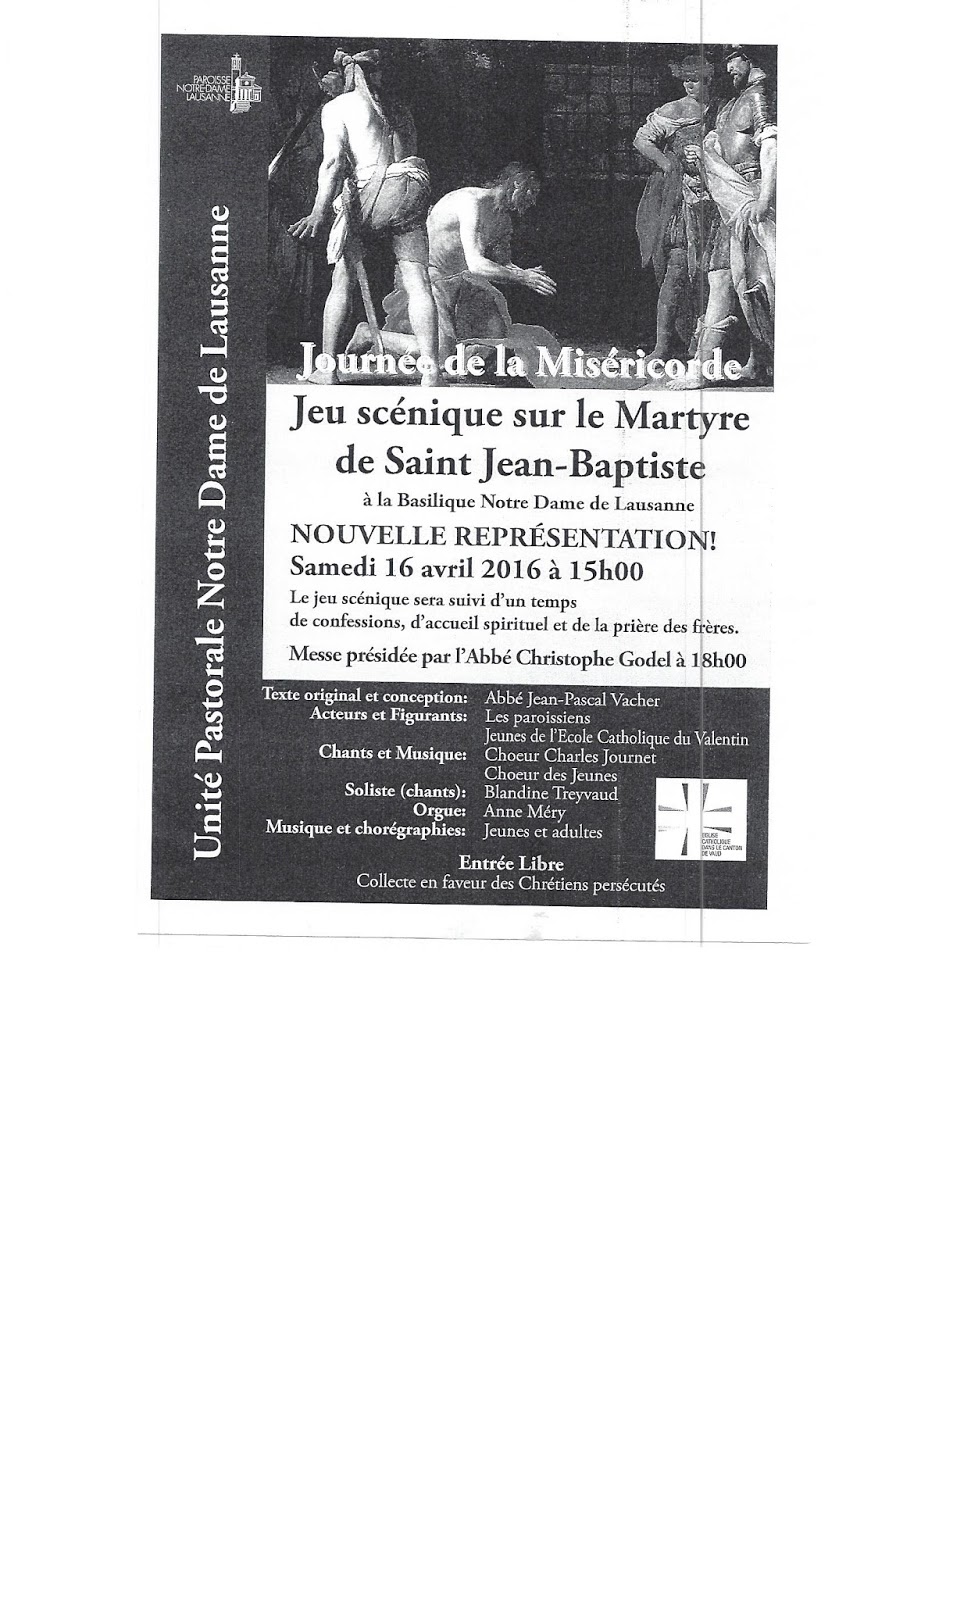 Invitation, Sa 16 avril, 15h00, Lausanne, St Jean Baptiste